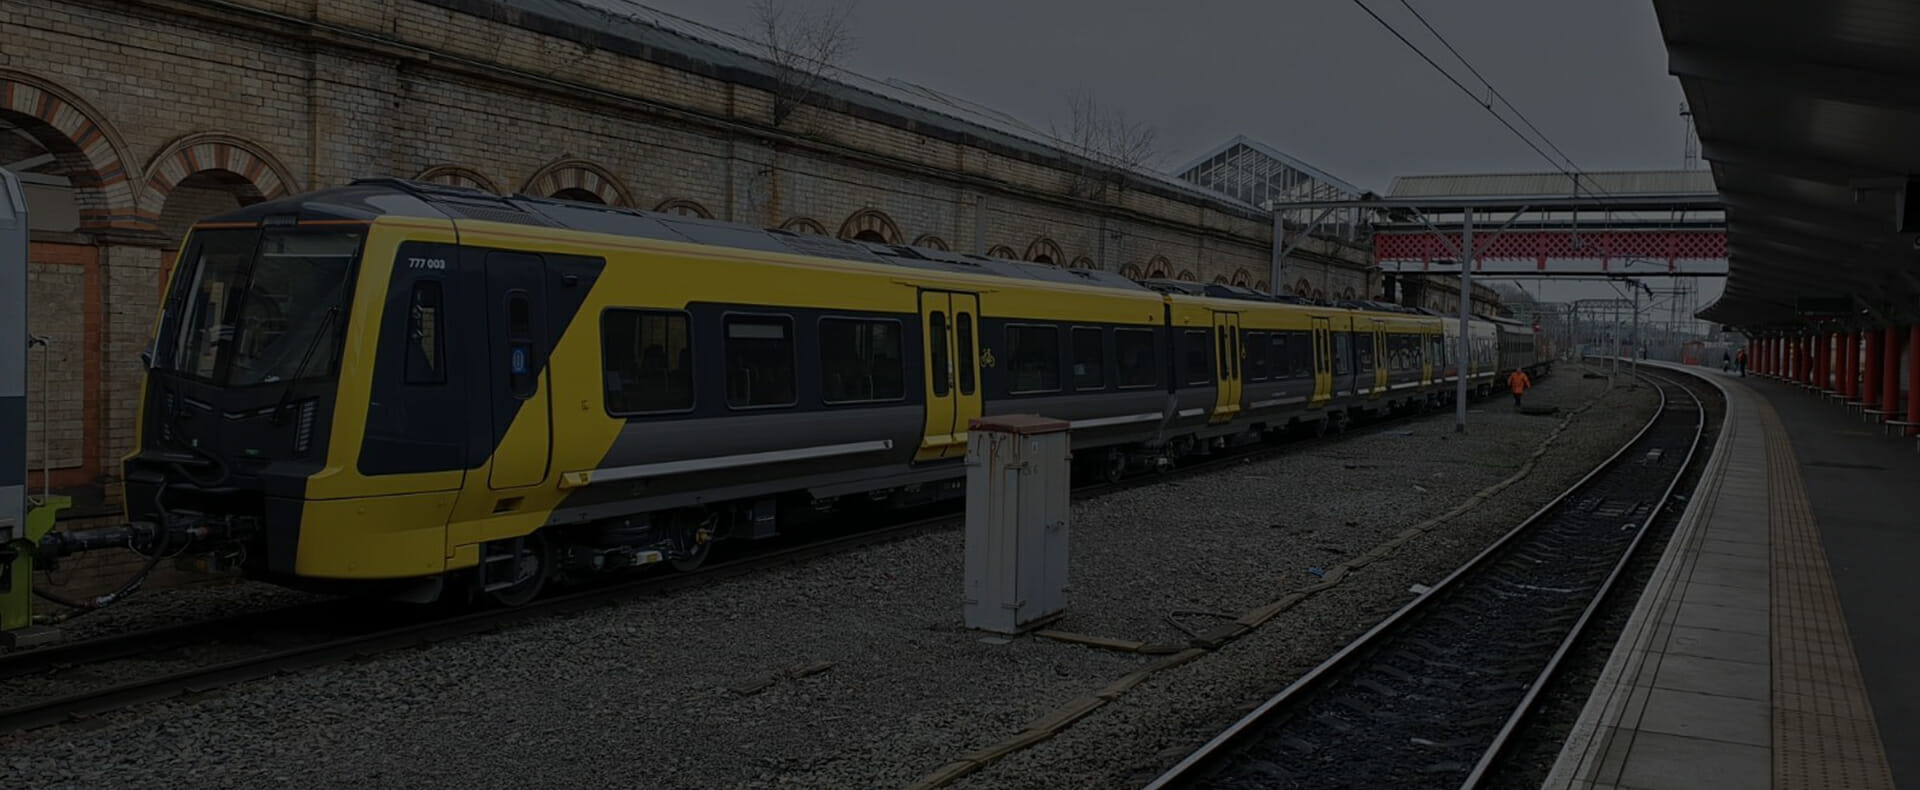 merseyrail liverpool yellow train at empty platform with footbridge overhead